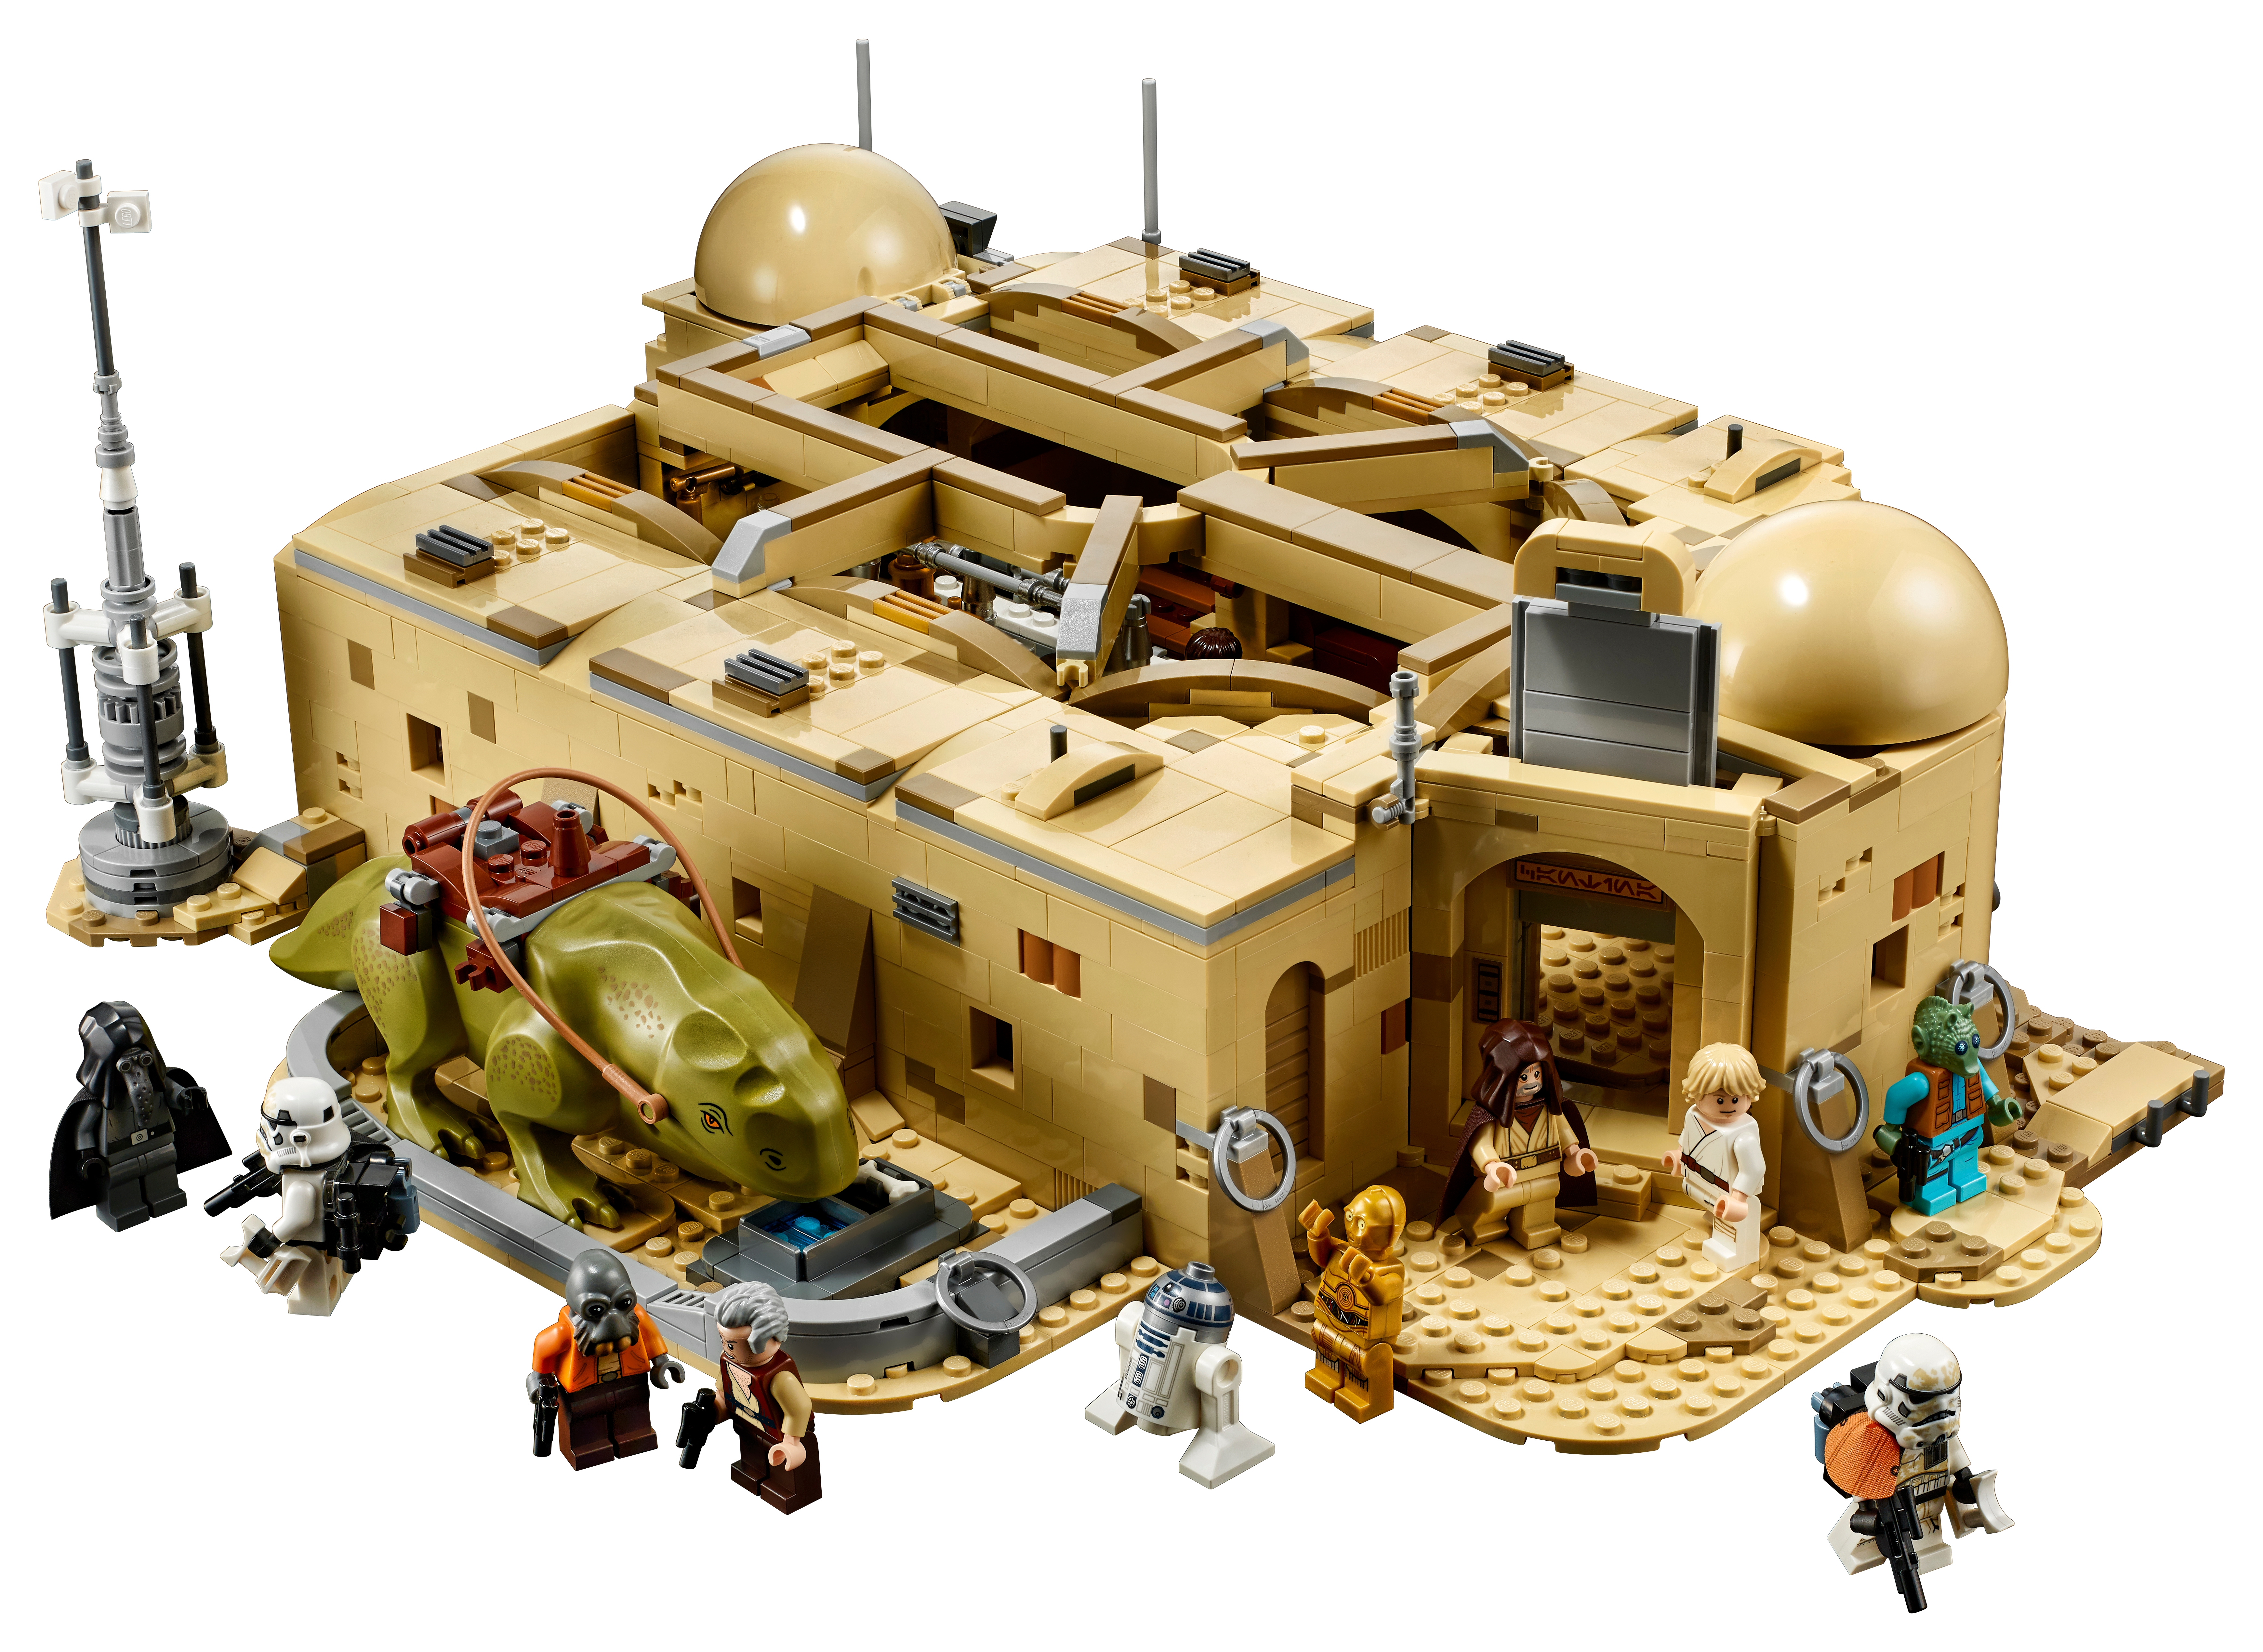 Details about   Star Wars 60016 Building Blocks Sets Mos Eisley Cantina Bricks Model Toy 75290 